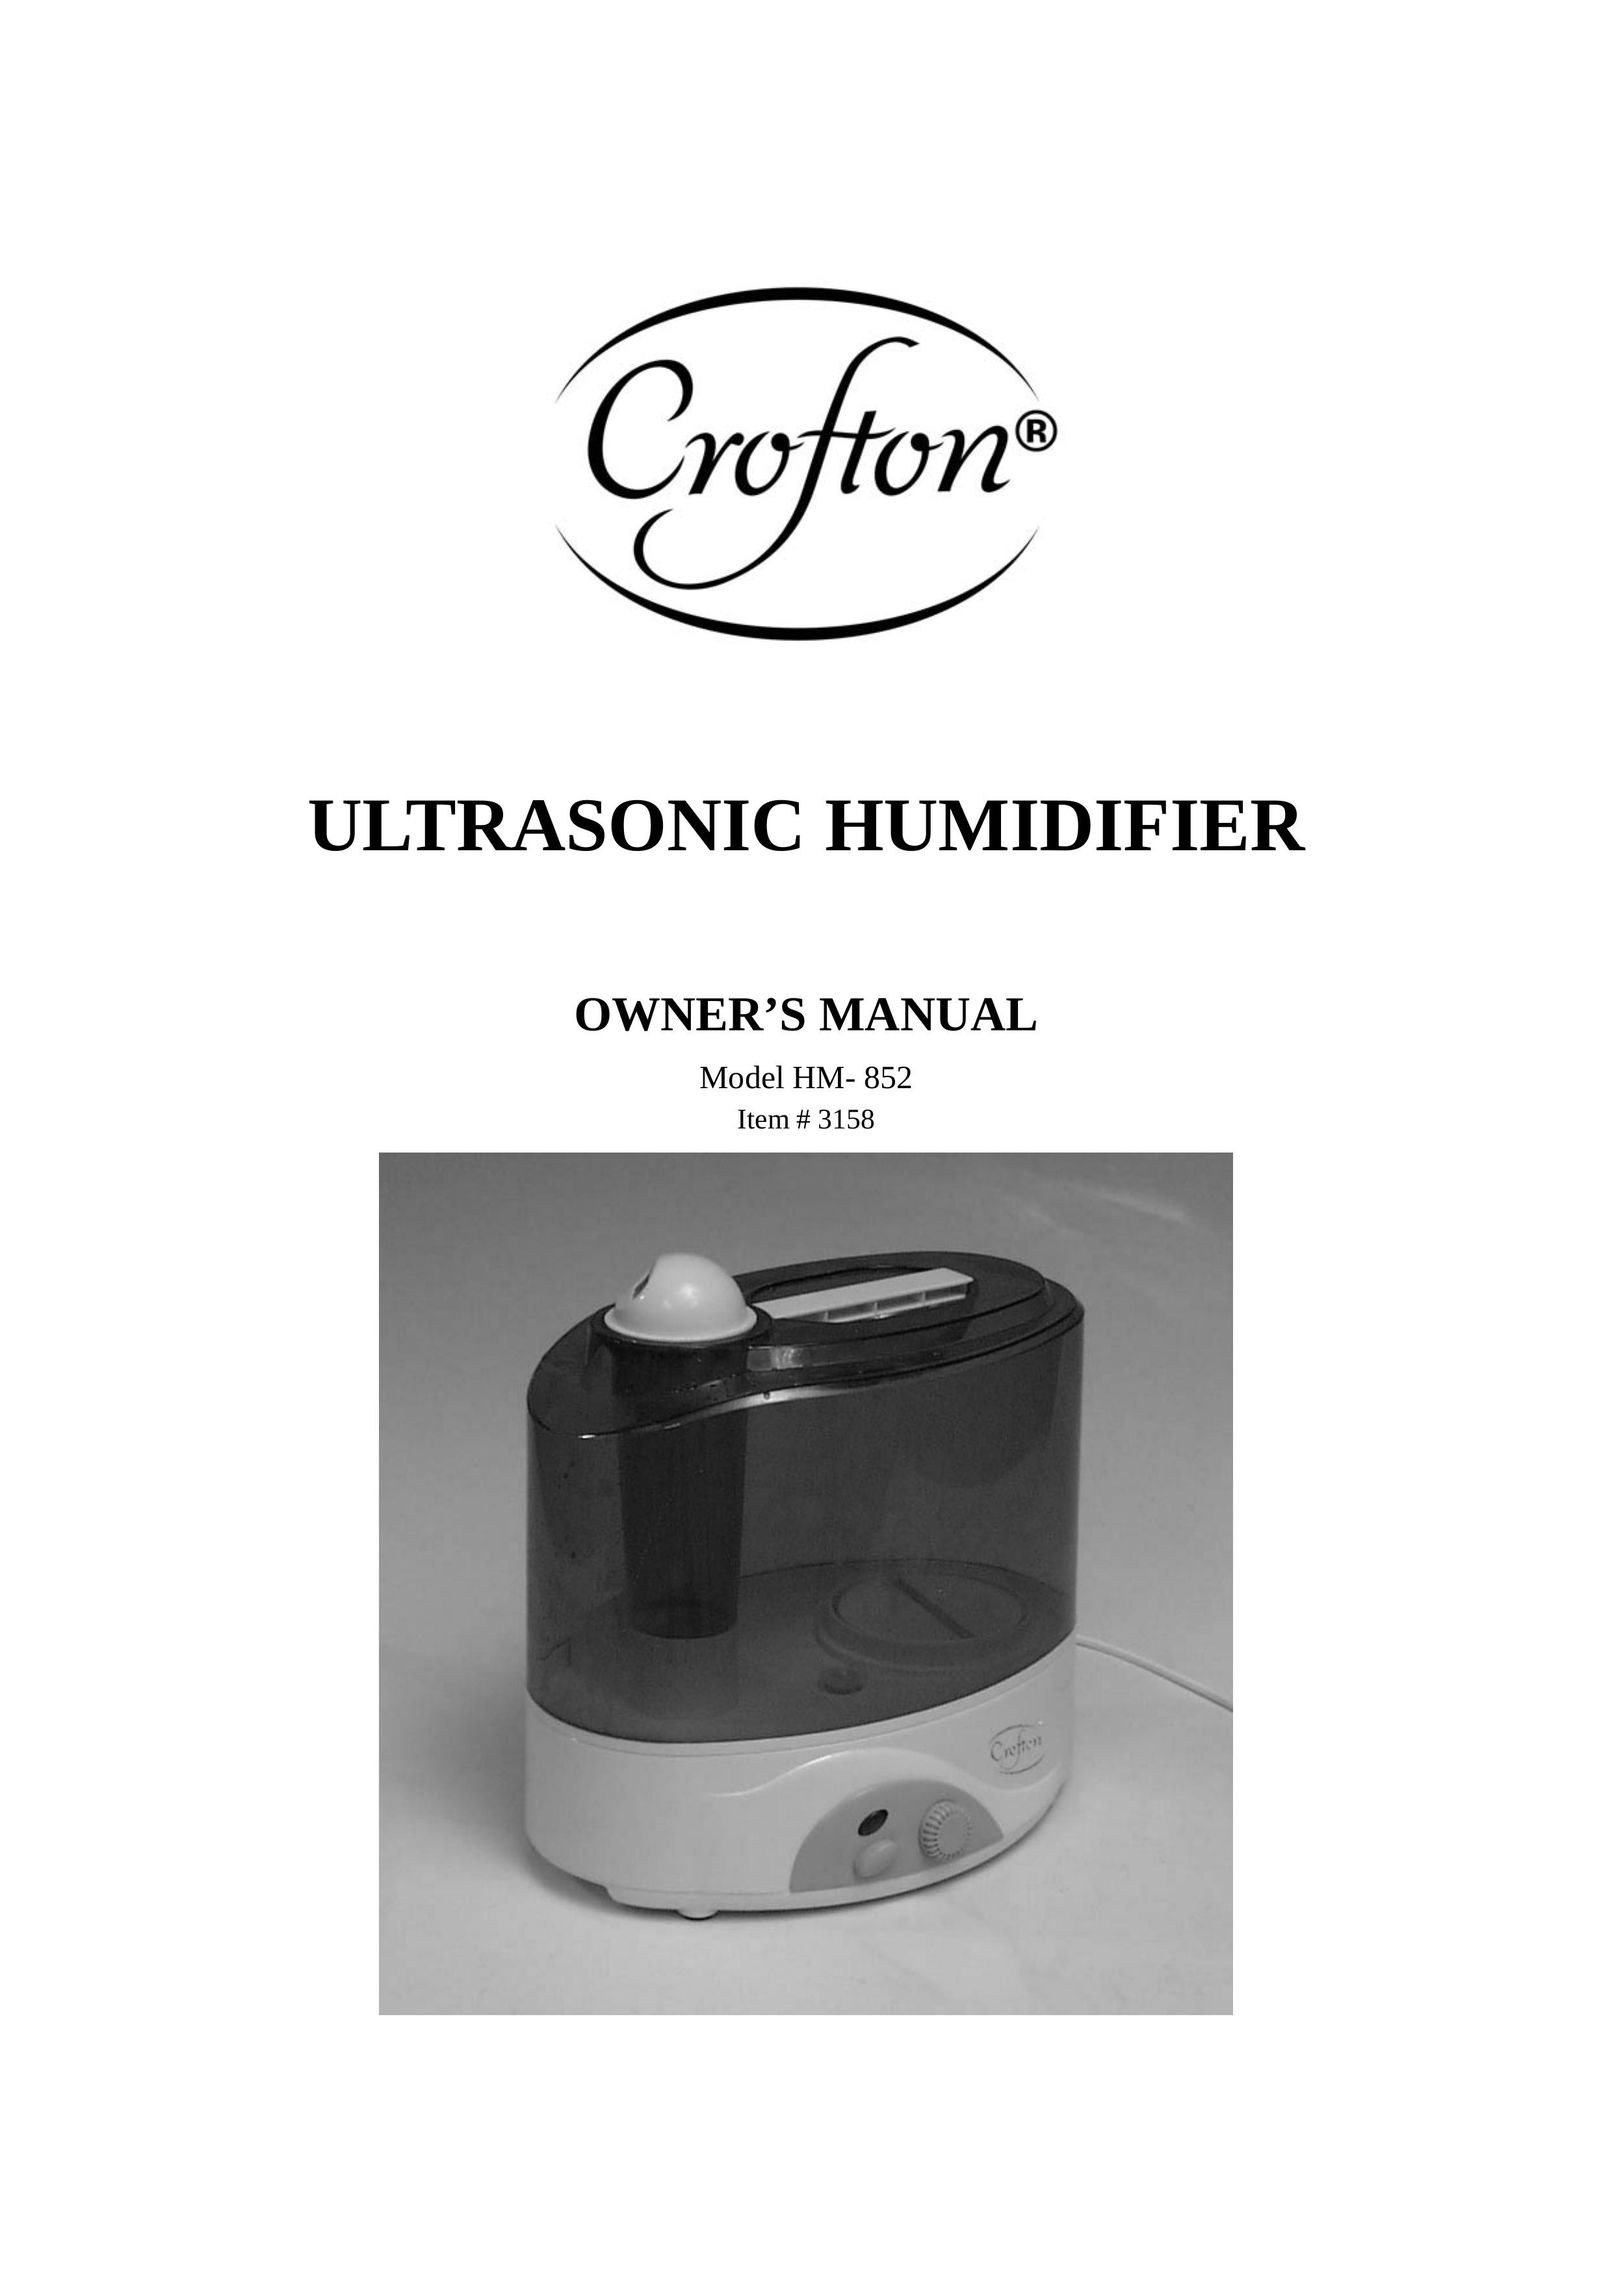 Wachsmuth & Krogmann HM- 852 Humidifier User Manual